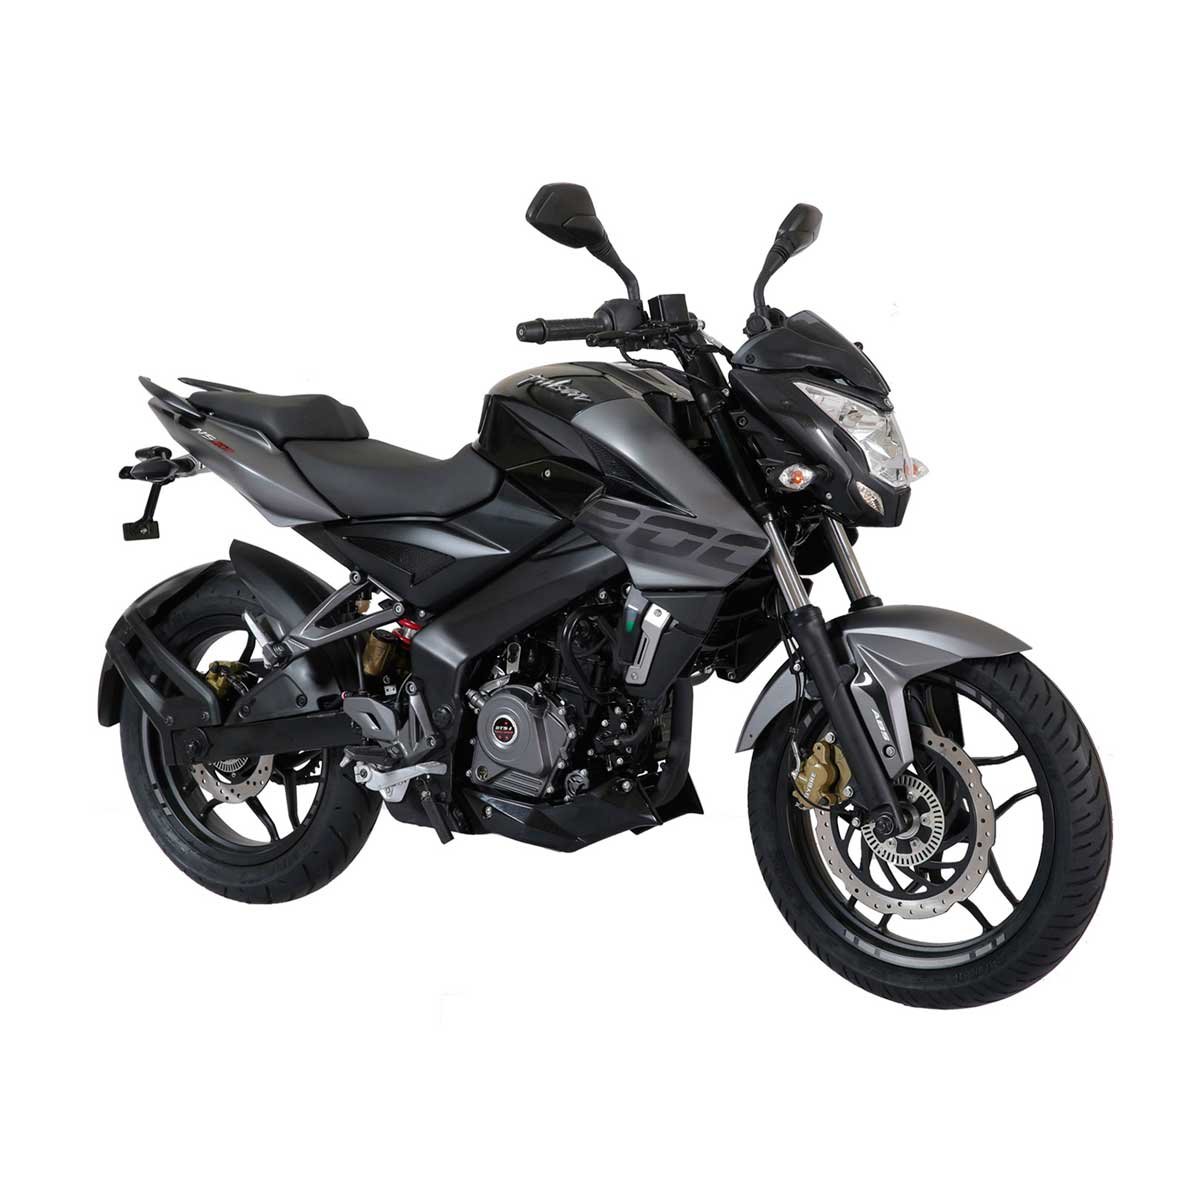 Motocicleta Pulsar Ns 200 Cc Fi Negra Bajaj